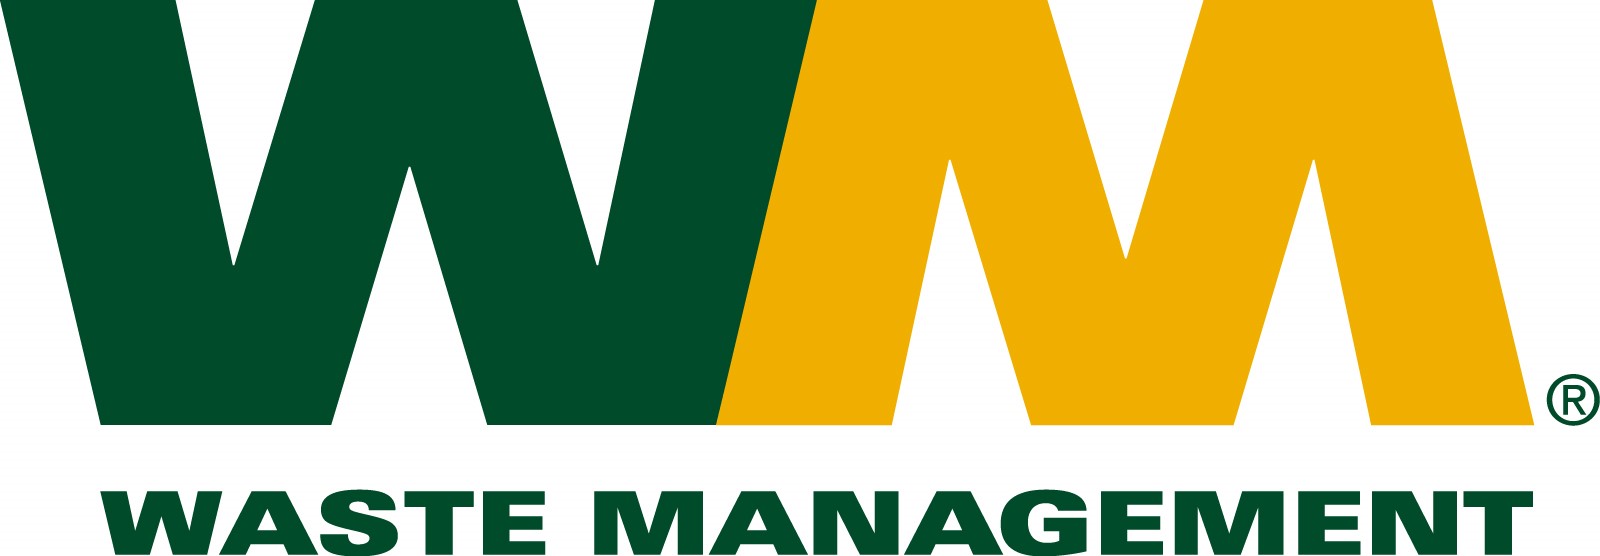 Waste Management logo